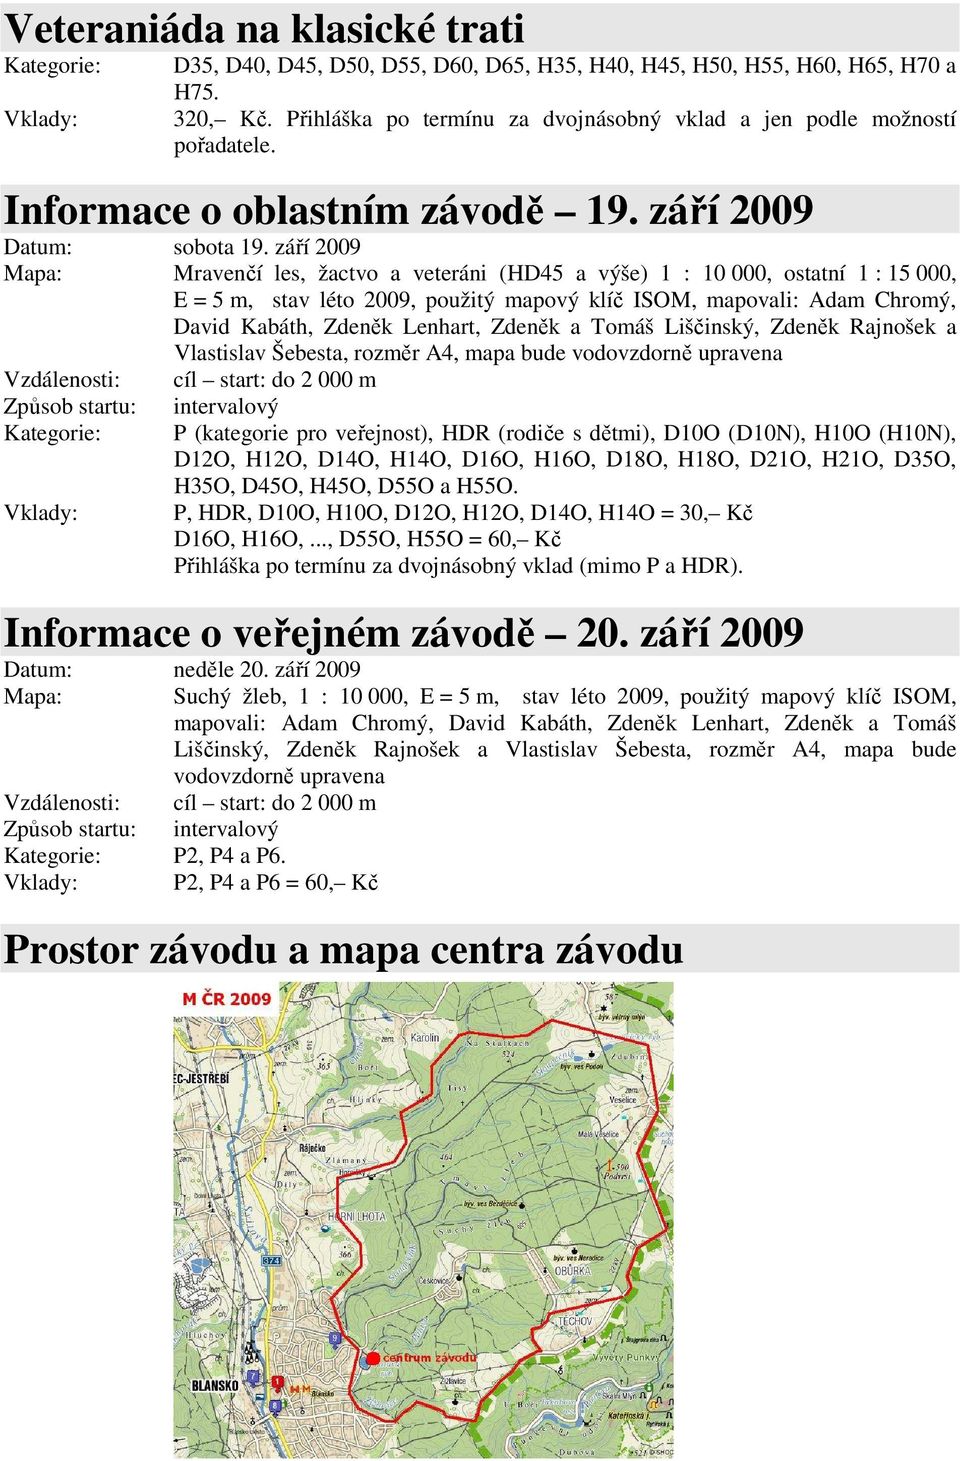 září 2009 Mapa: Mravenčí les, žactvo a veteráni (HD45 a výše) 1 : 10 000, ostatní 1 : 15 000, E = 5 m, stav léto 2009, použitý mapový klíč ISOM, mapovali: Adam Chromý, David Kabáth, Zdeněk Lenhart,